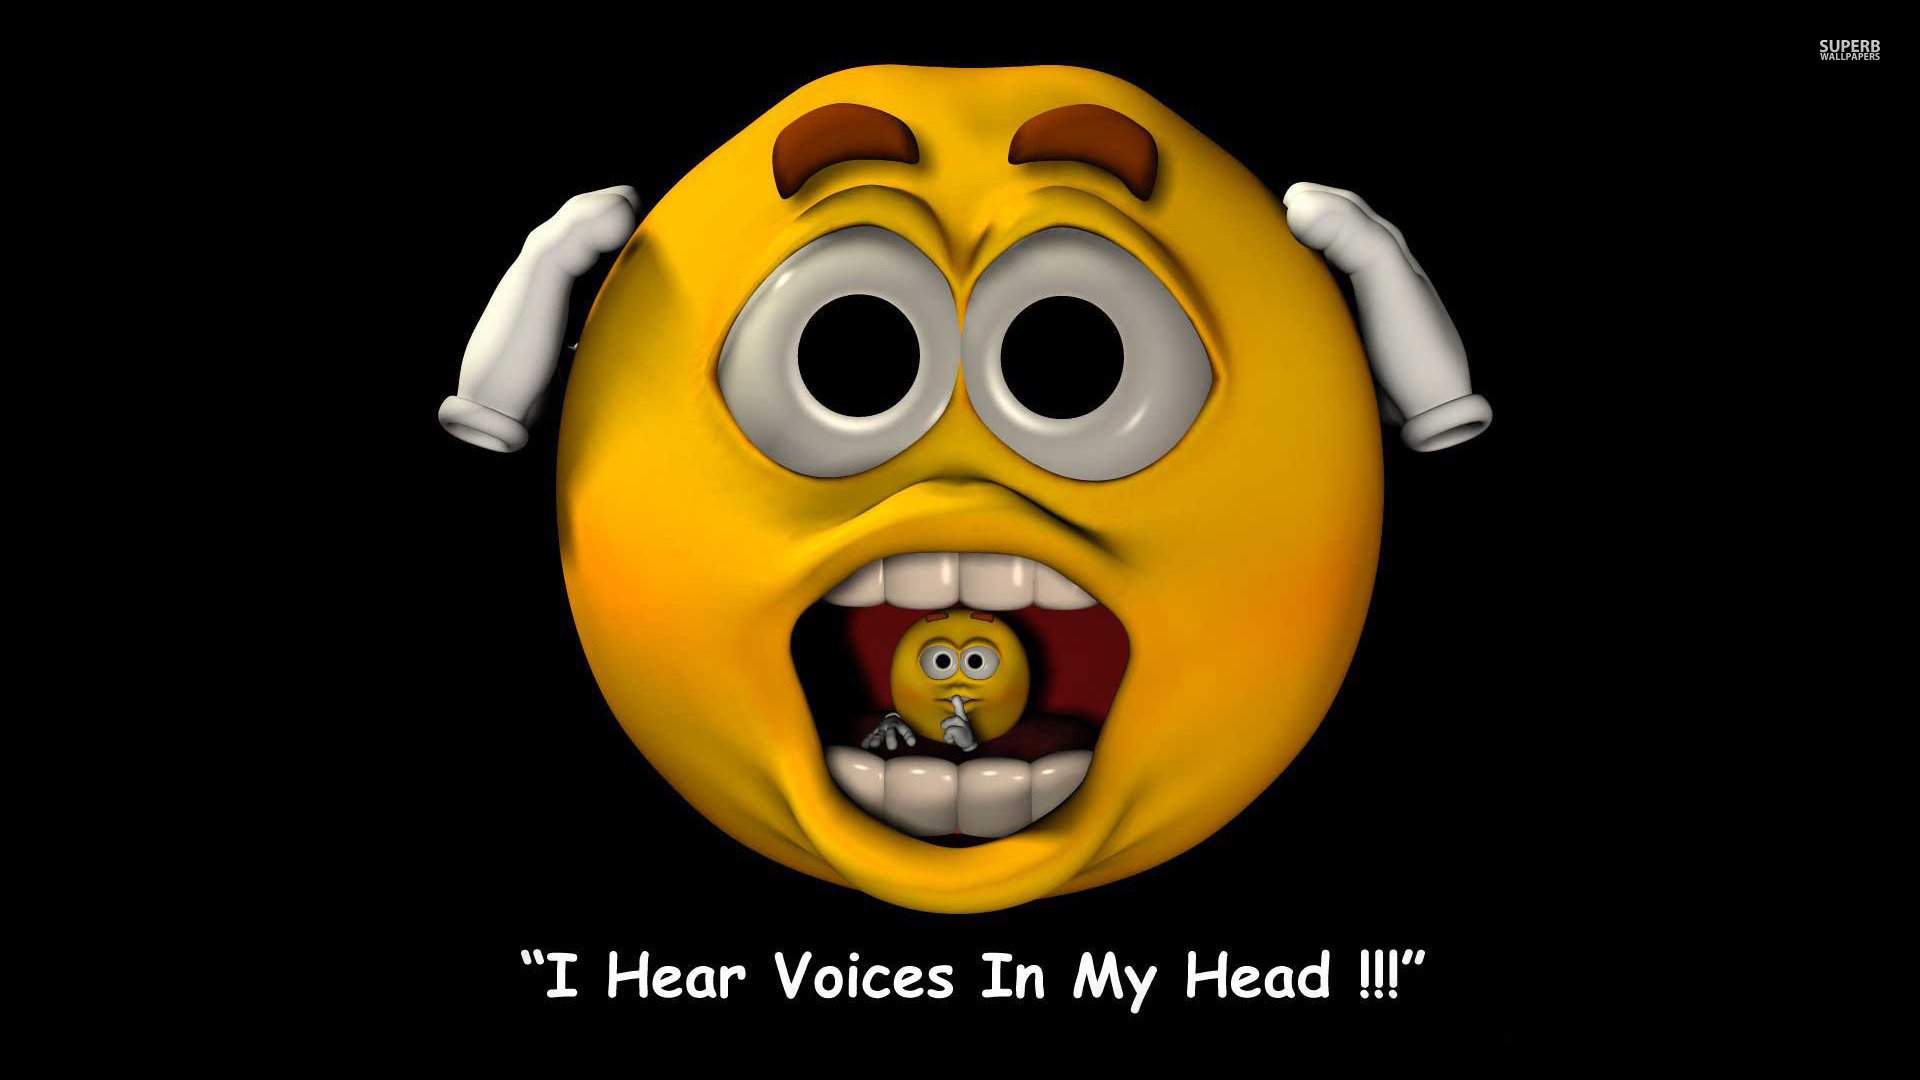 i-hear-voices-in-my-head-25605-1920x1080 (1).jpg